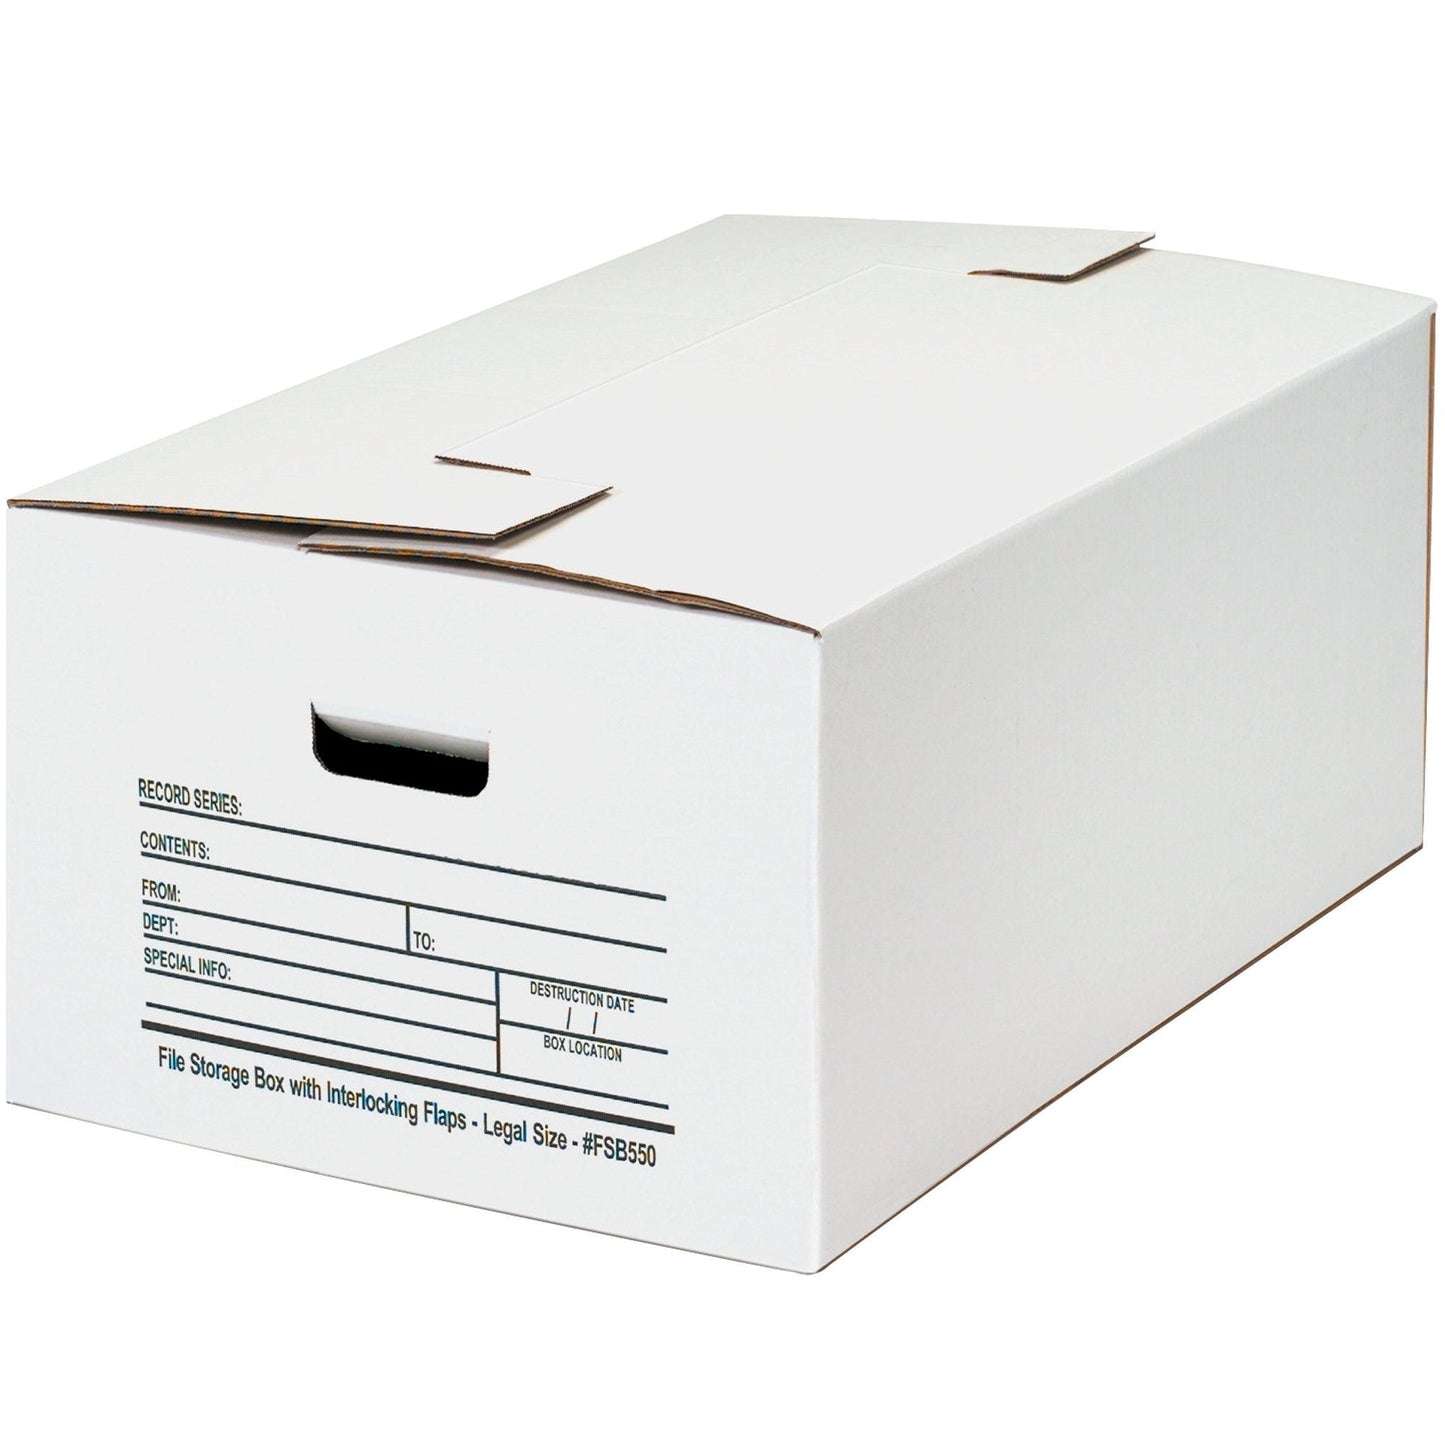 24 x 15 x 10" Interlocking Flap File Storage Boxes - FSB550